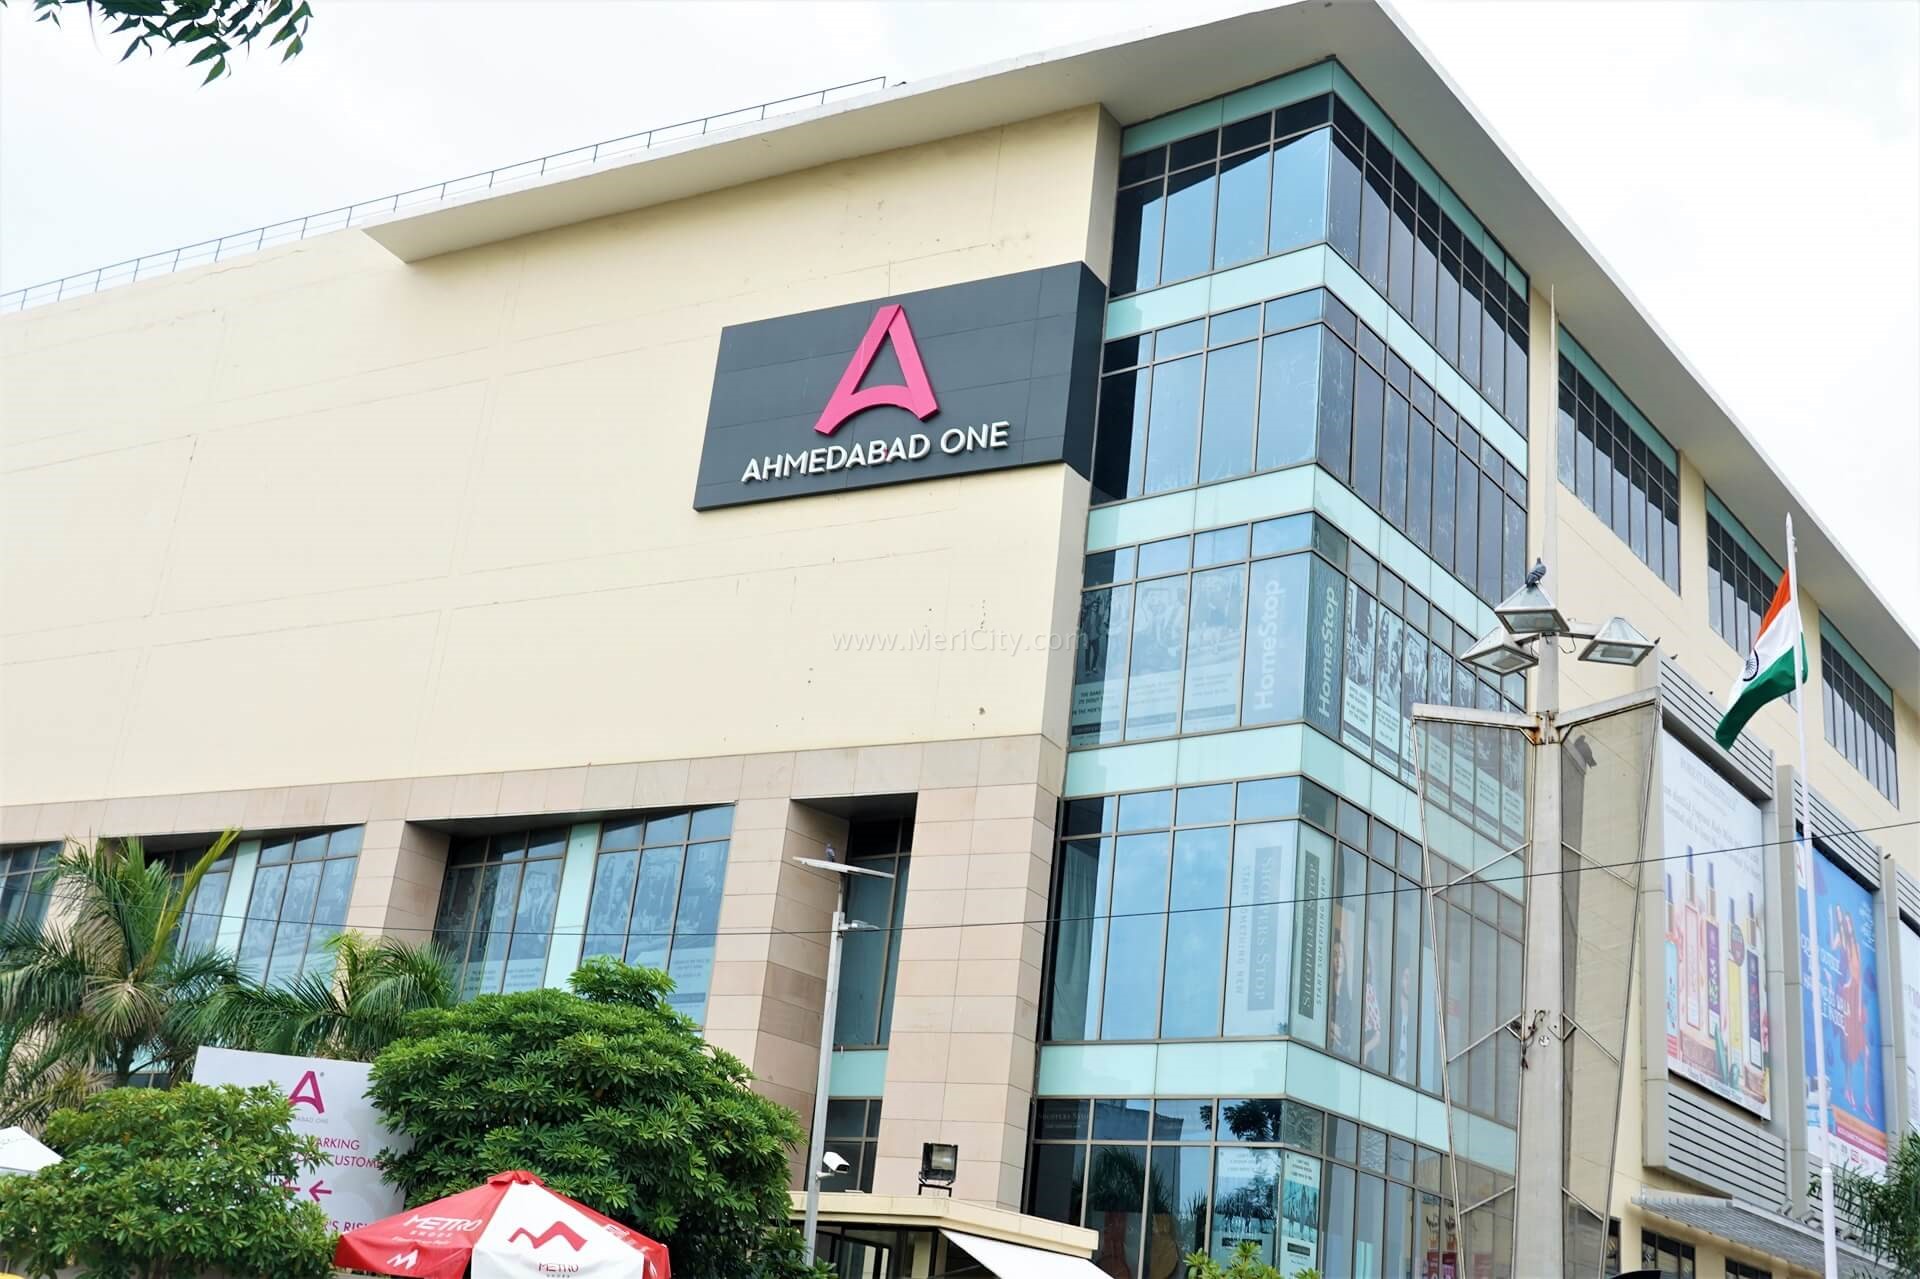 Alpha One Mall in Ahmedabad, Vastrapur - Mall, in Ahmedabad, Gujarat ...